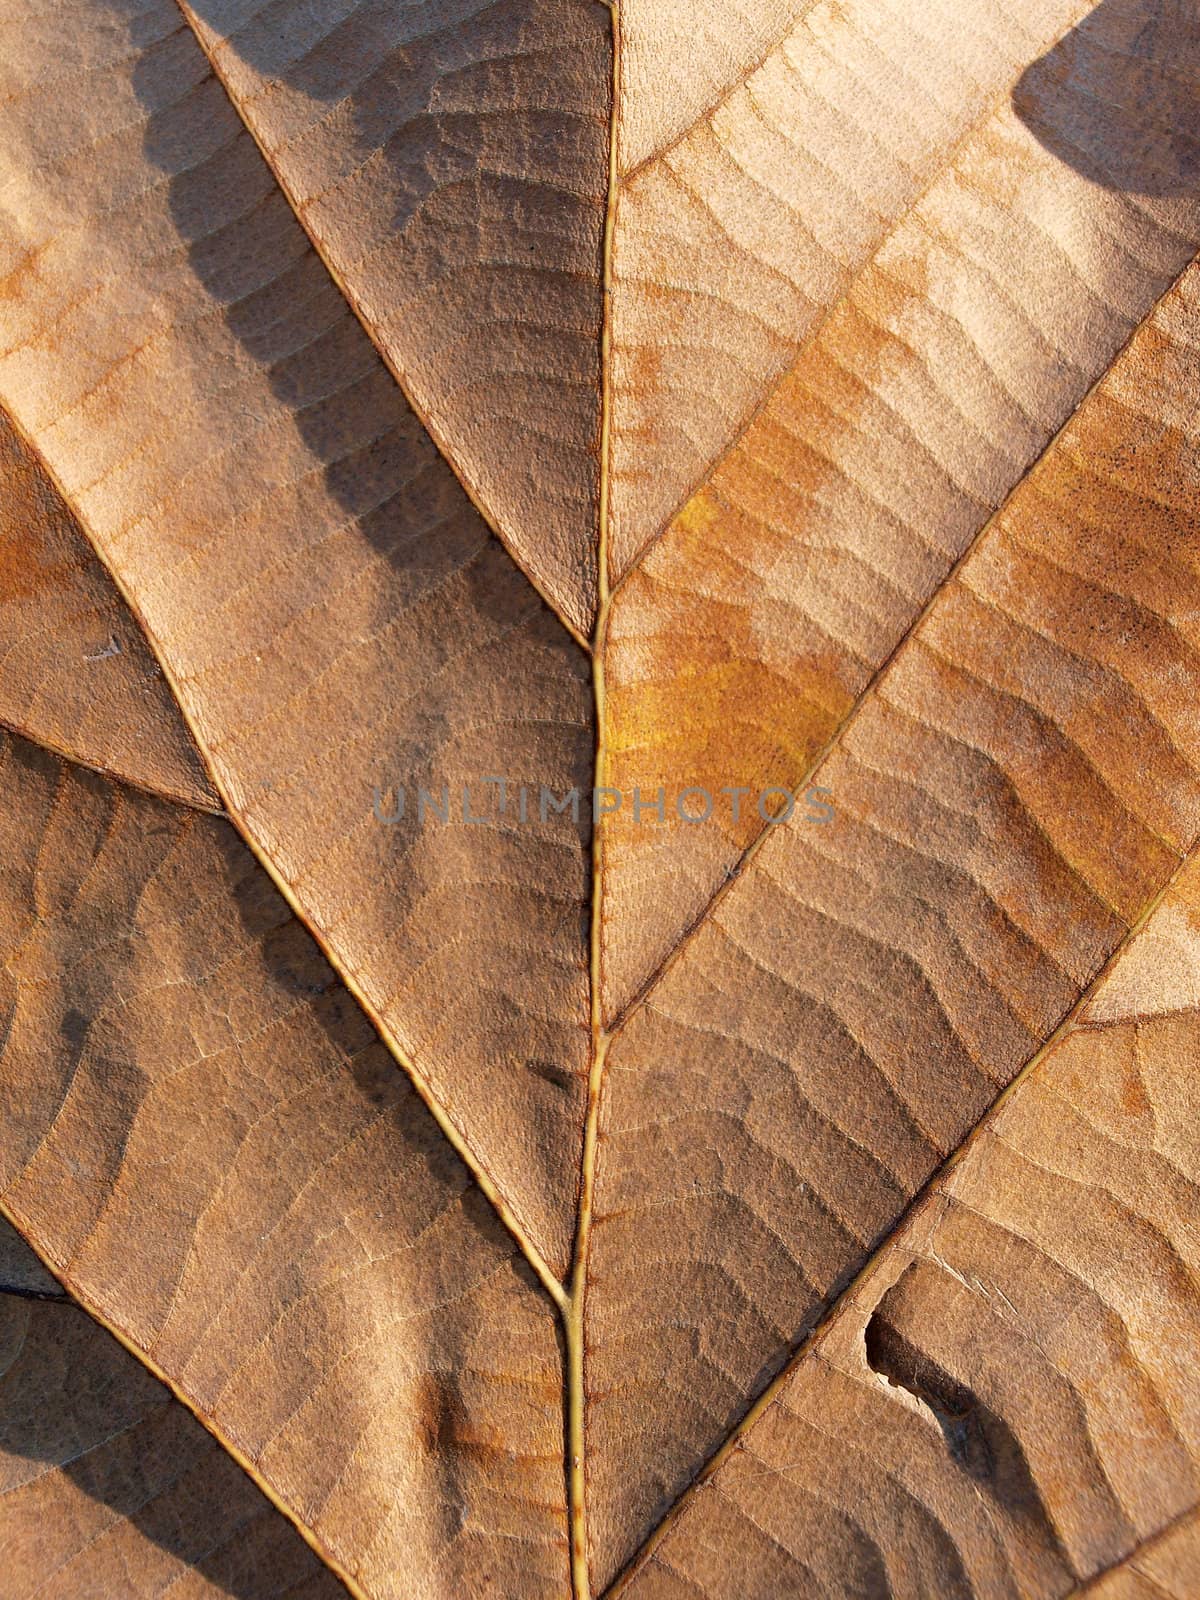 dry leaf on textured paper (vertical) by jakgree